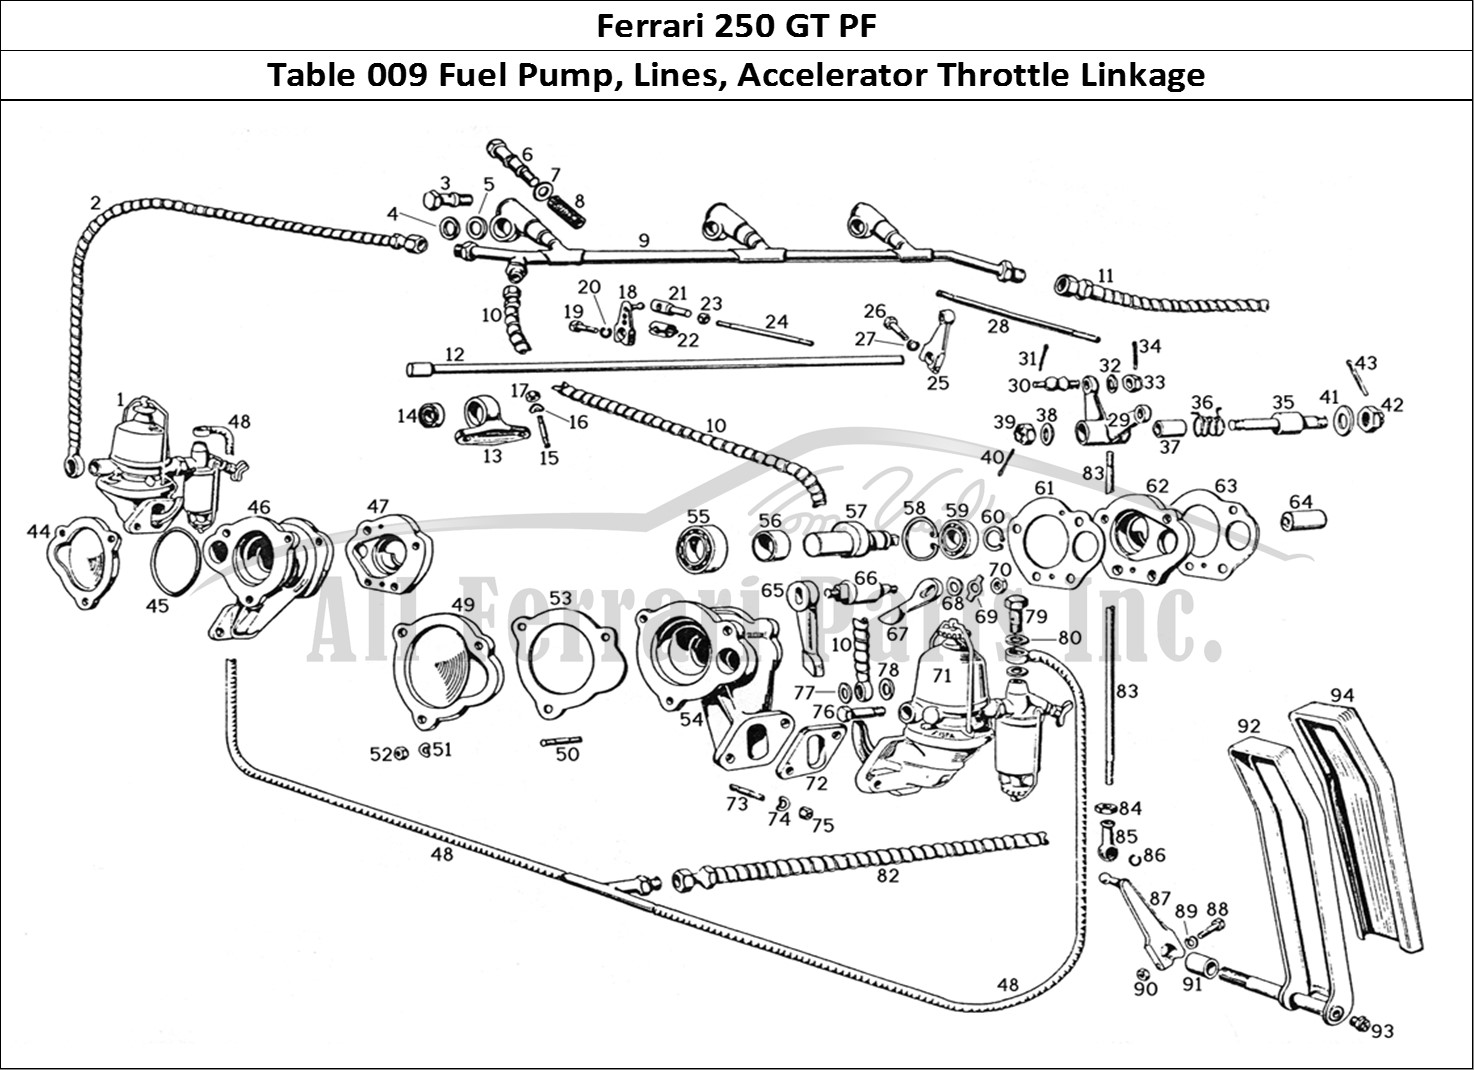 Ferrari Parts Ferrari 250 GTE (1957) Page 009 Fuel Feeding and Regulati